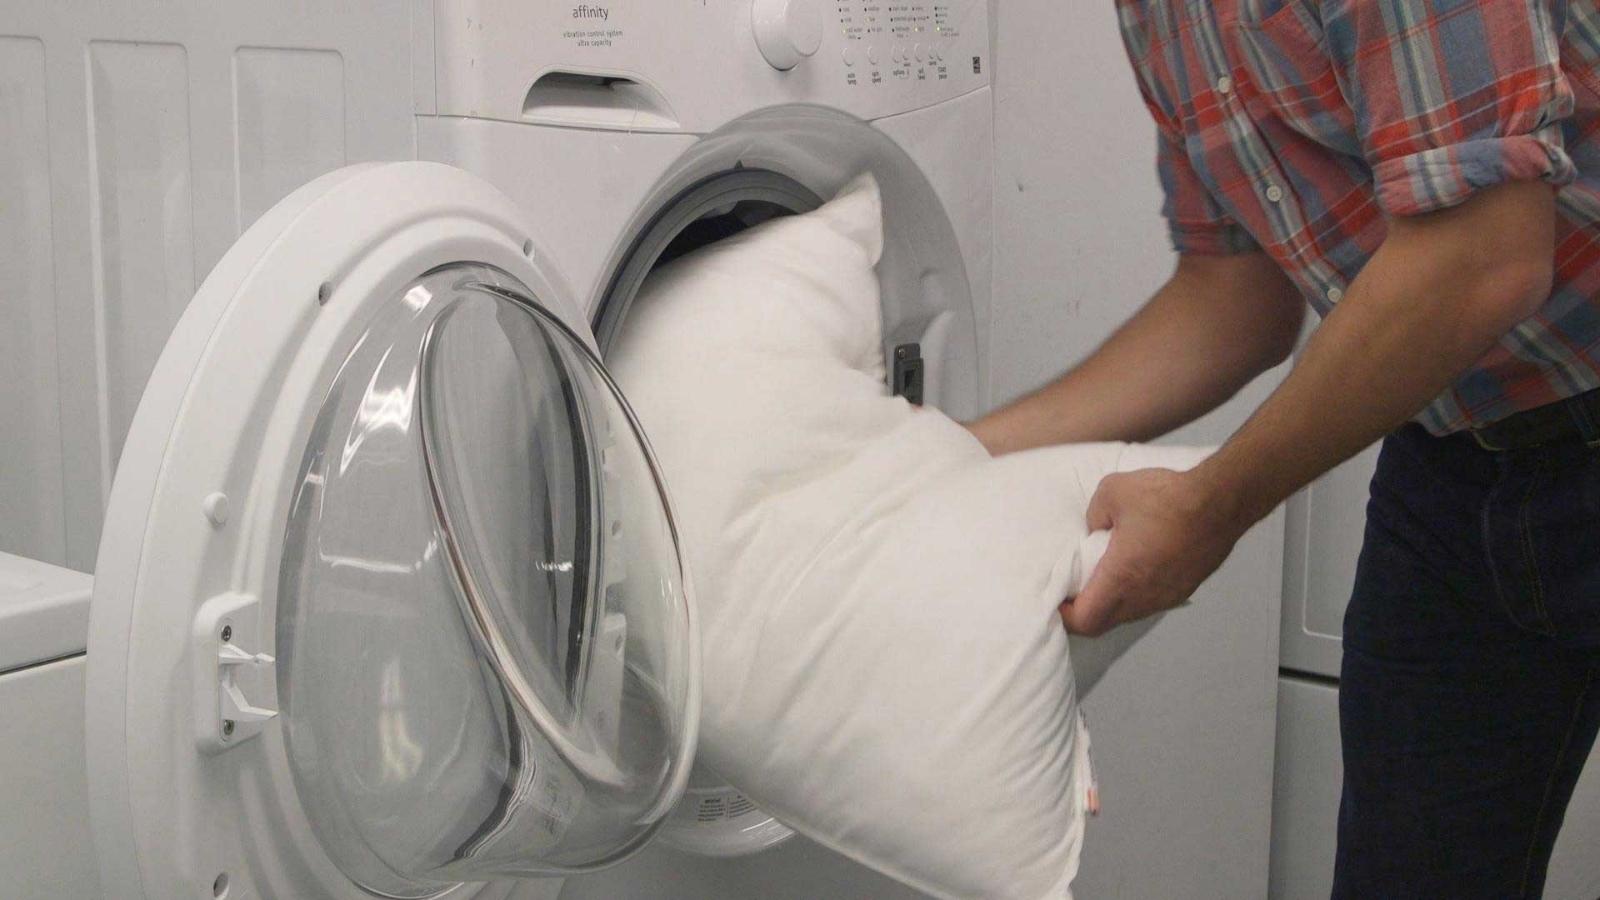 Pillow in washing machine